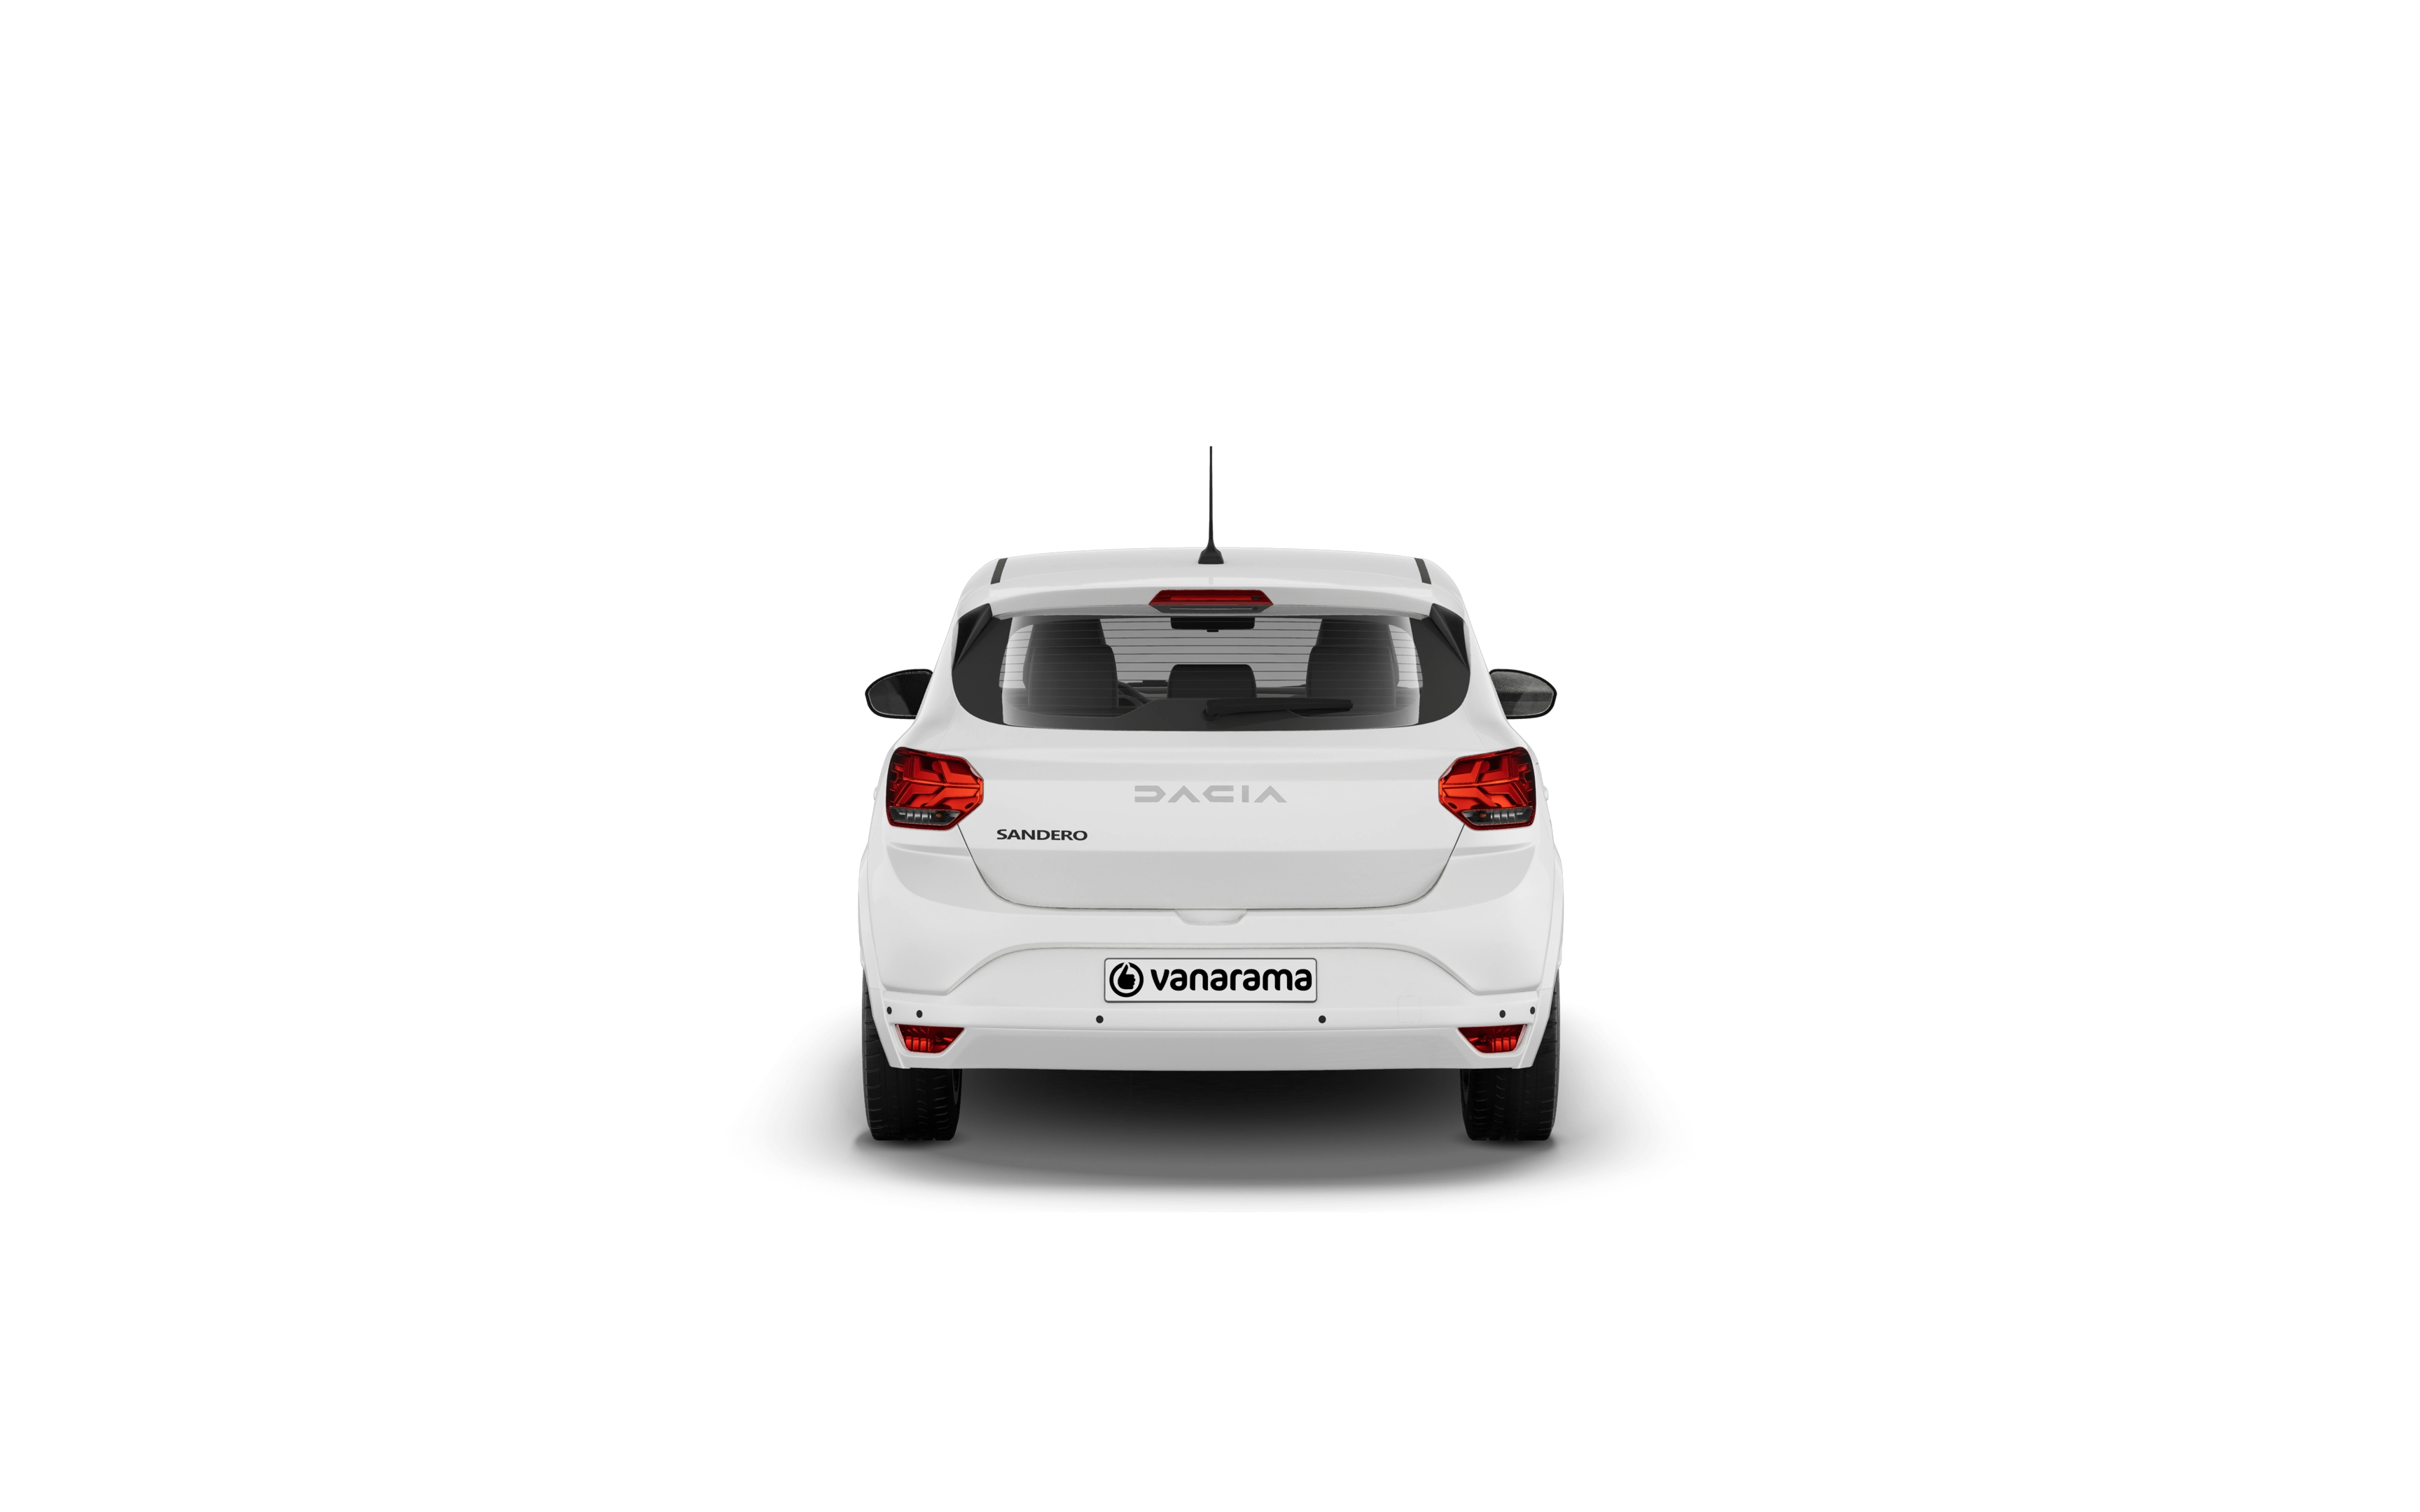 Dacia sandero hatchback 1.0 tce expression 5 doors